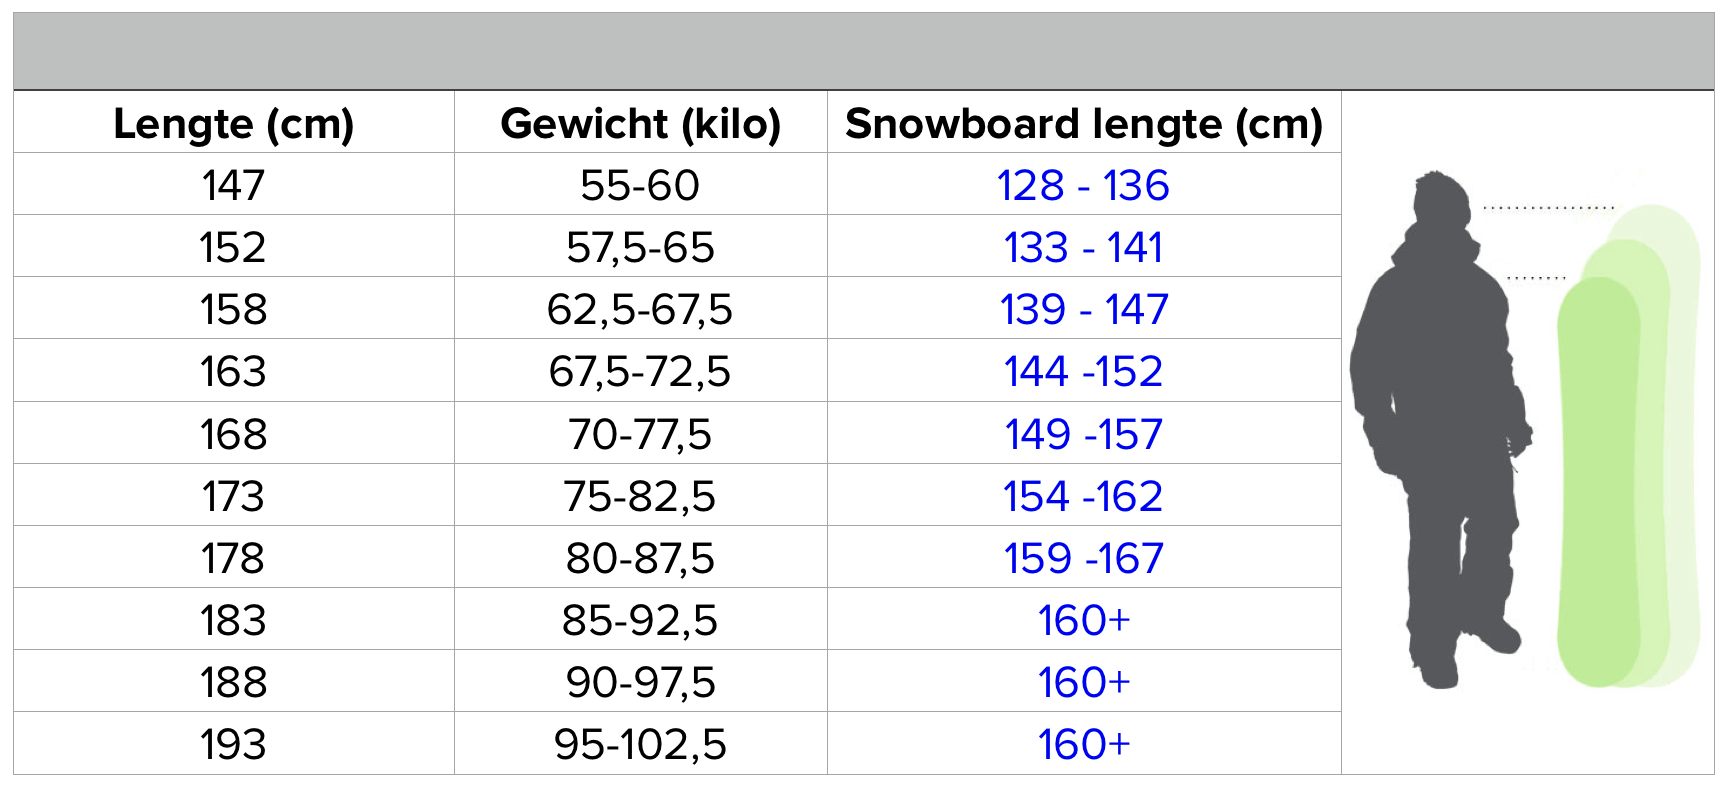 Подобрать сноуборд по весу. Размер сноуборда. Подбор сноуборда по весу. Размер сноуборда по росту и весу. Подобрать сноуборд по росту.